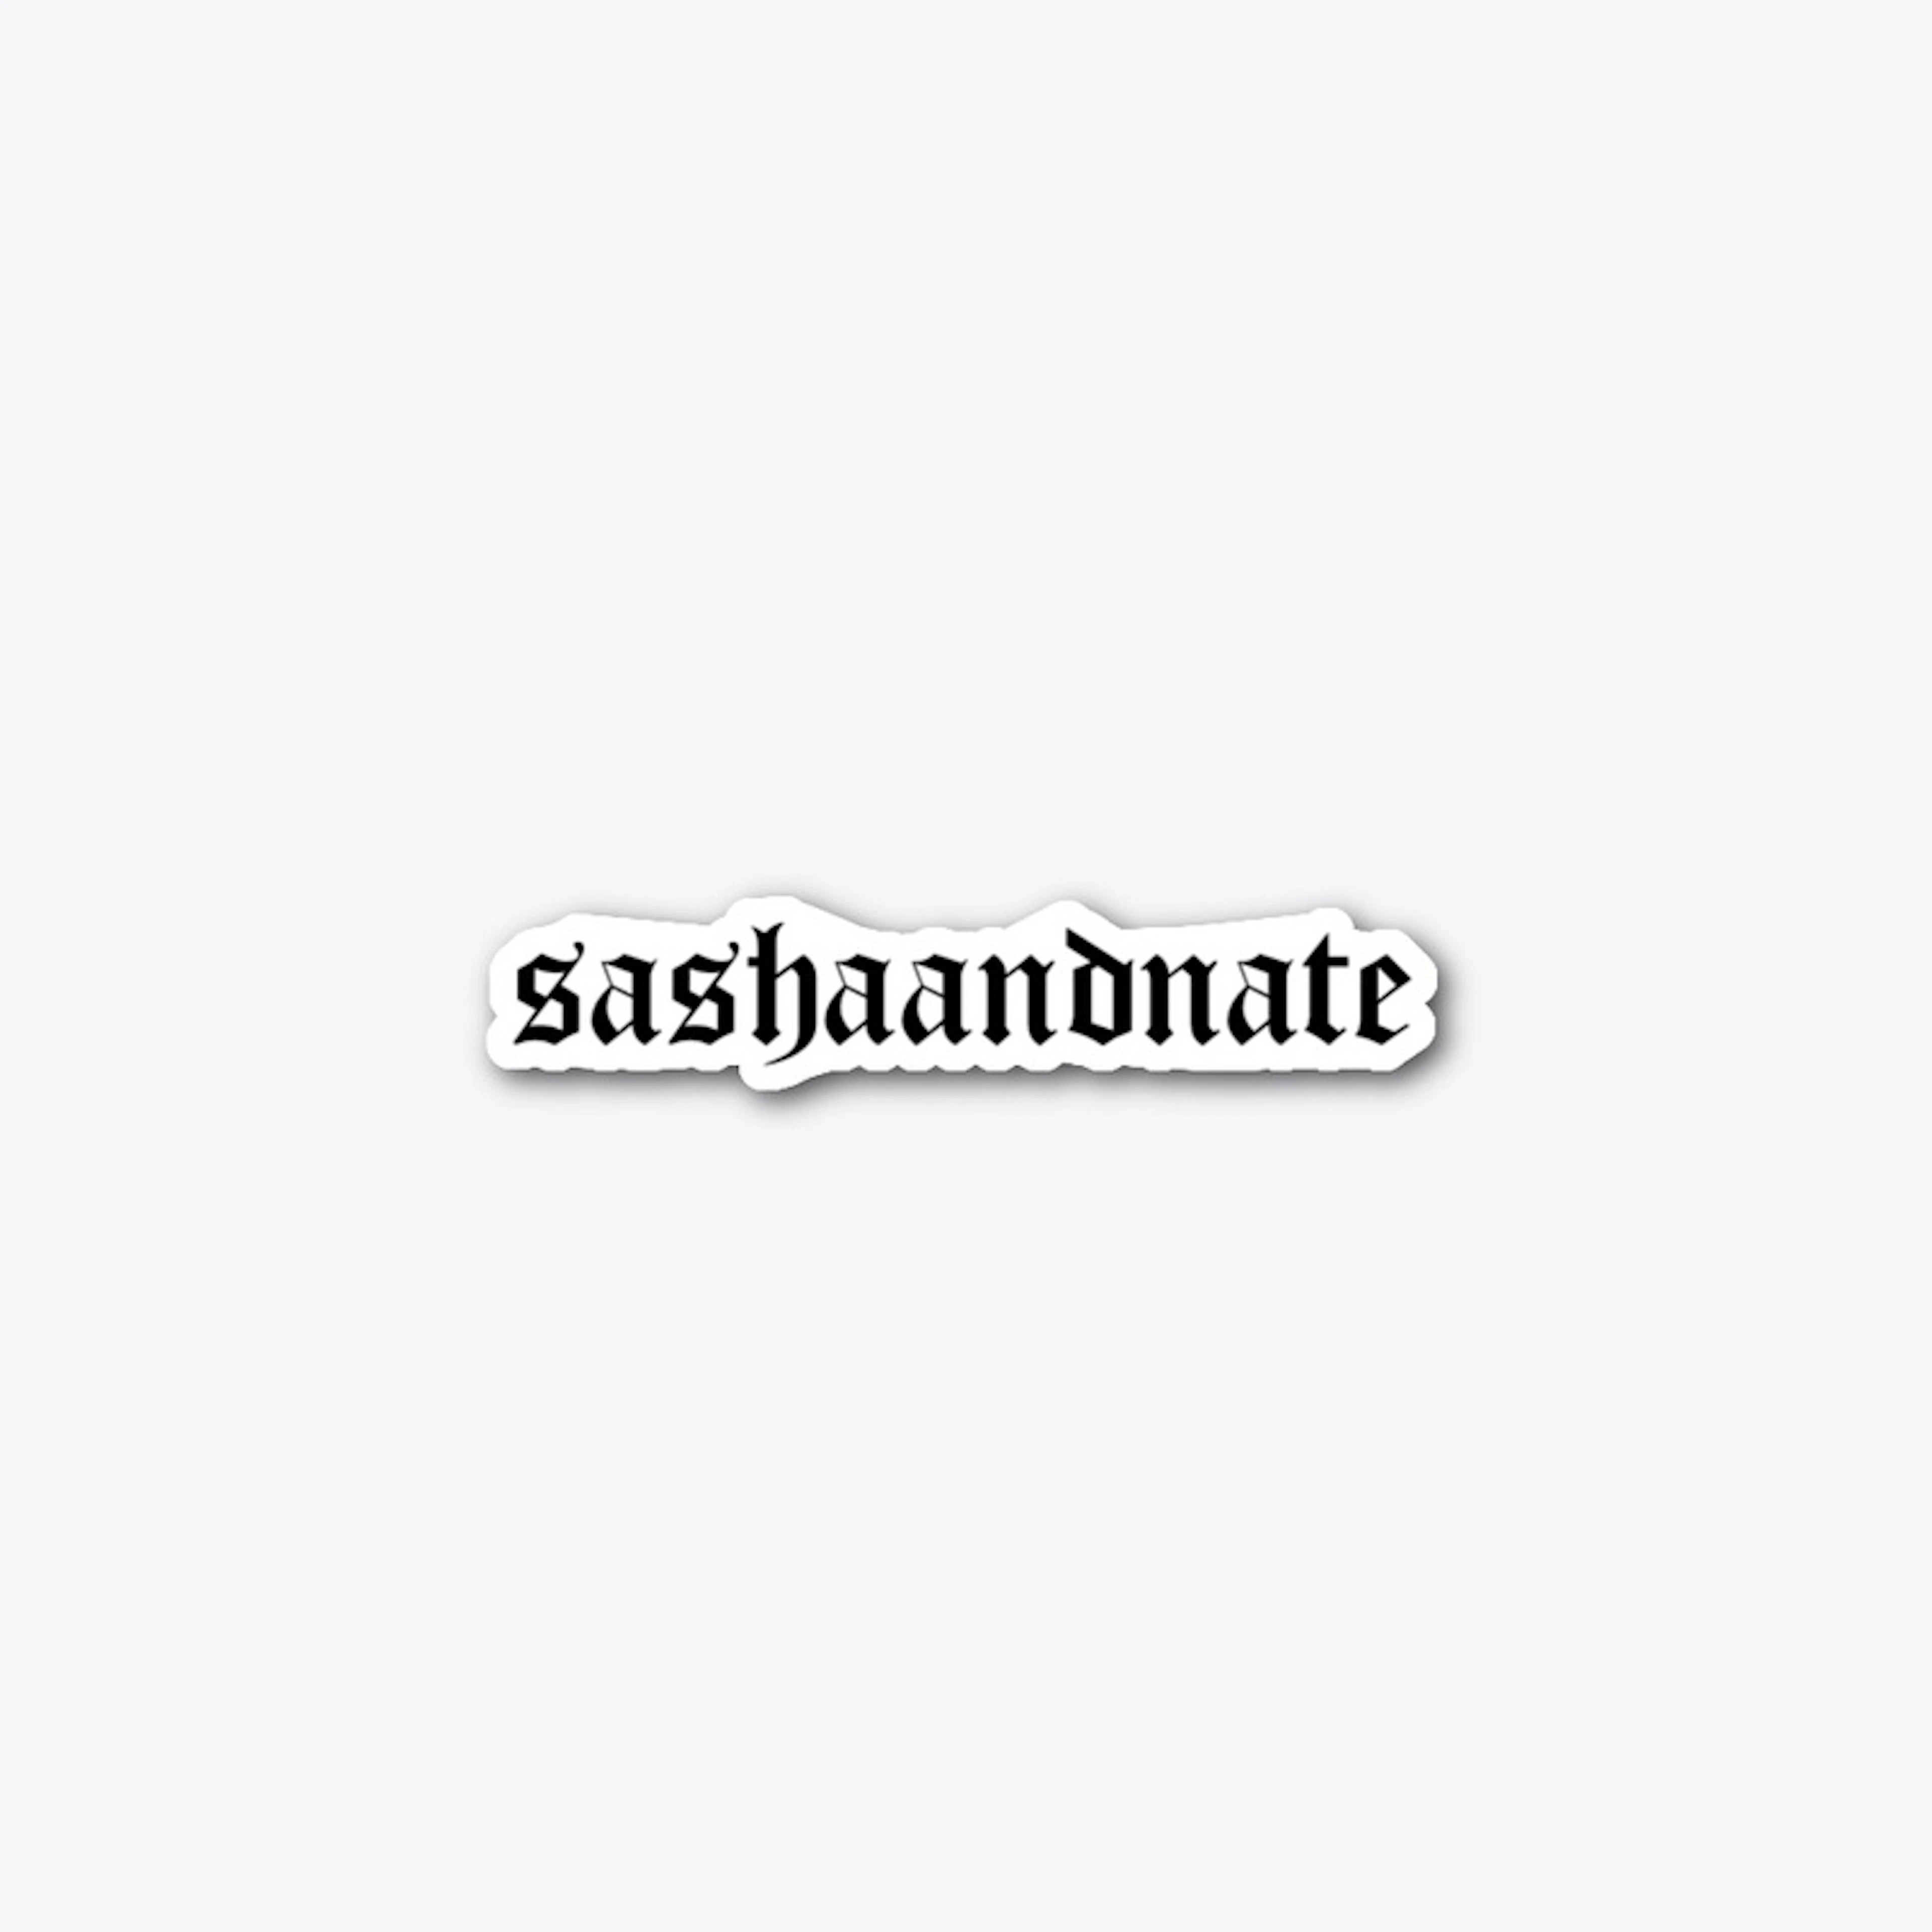 sashaandnate sticker (Old English)